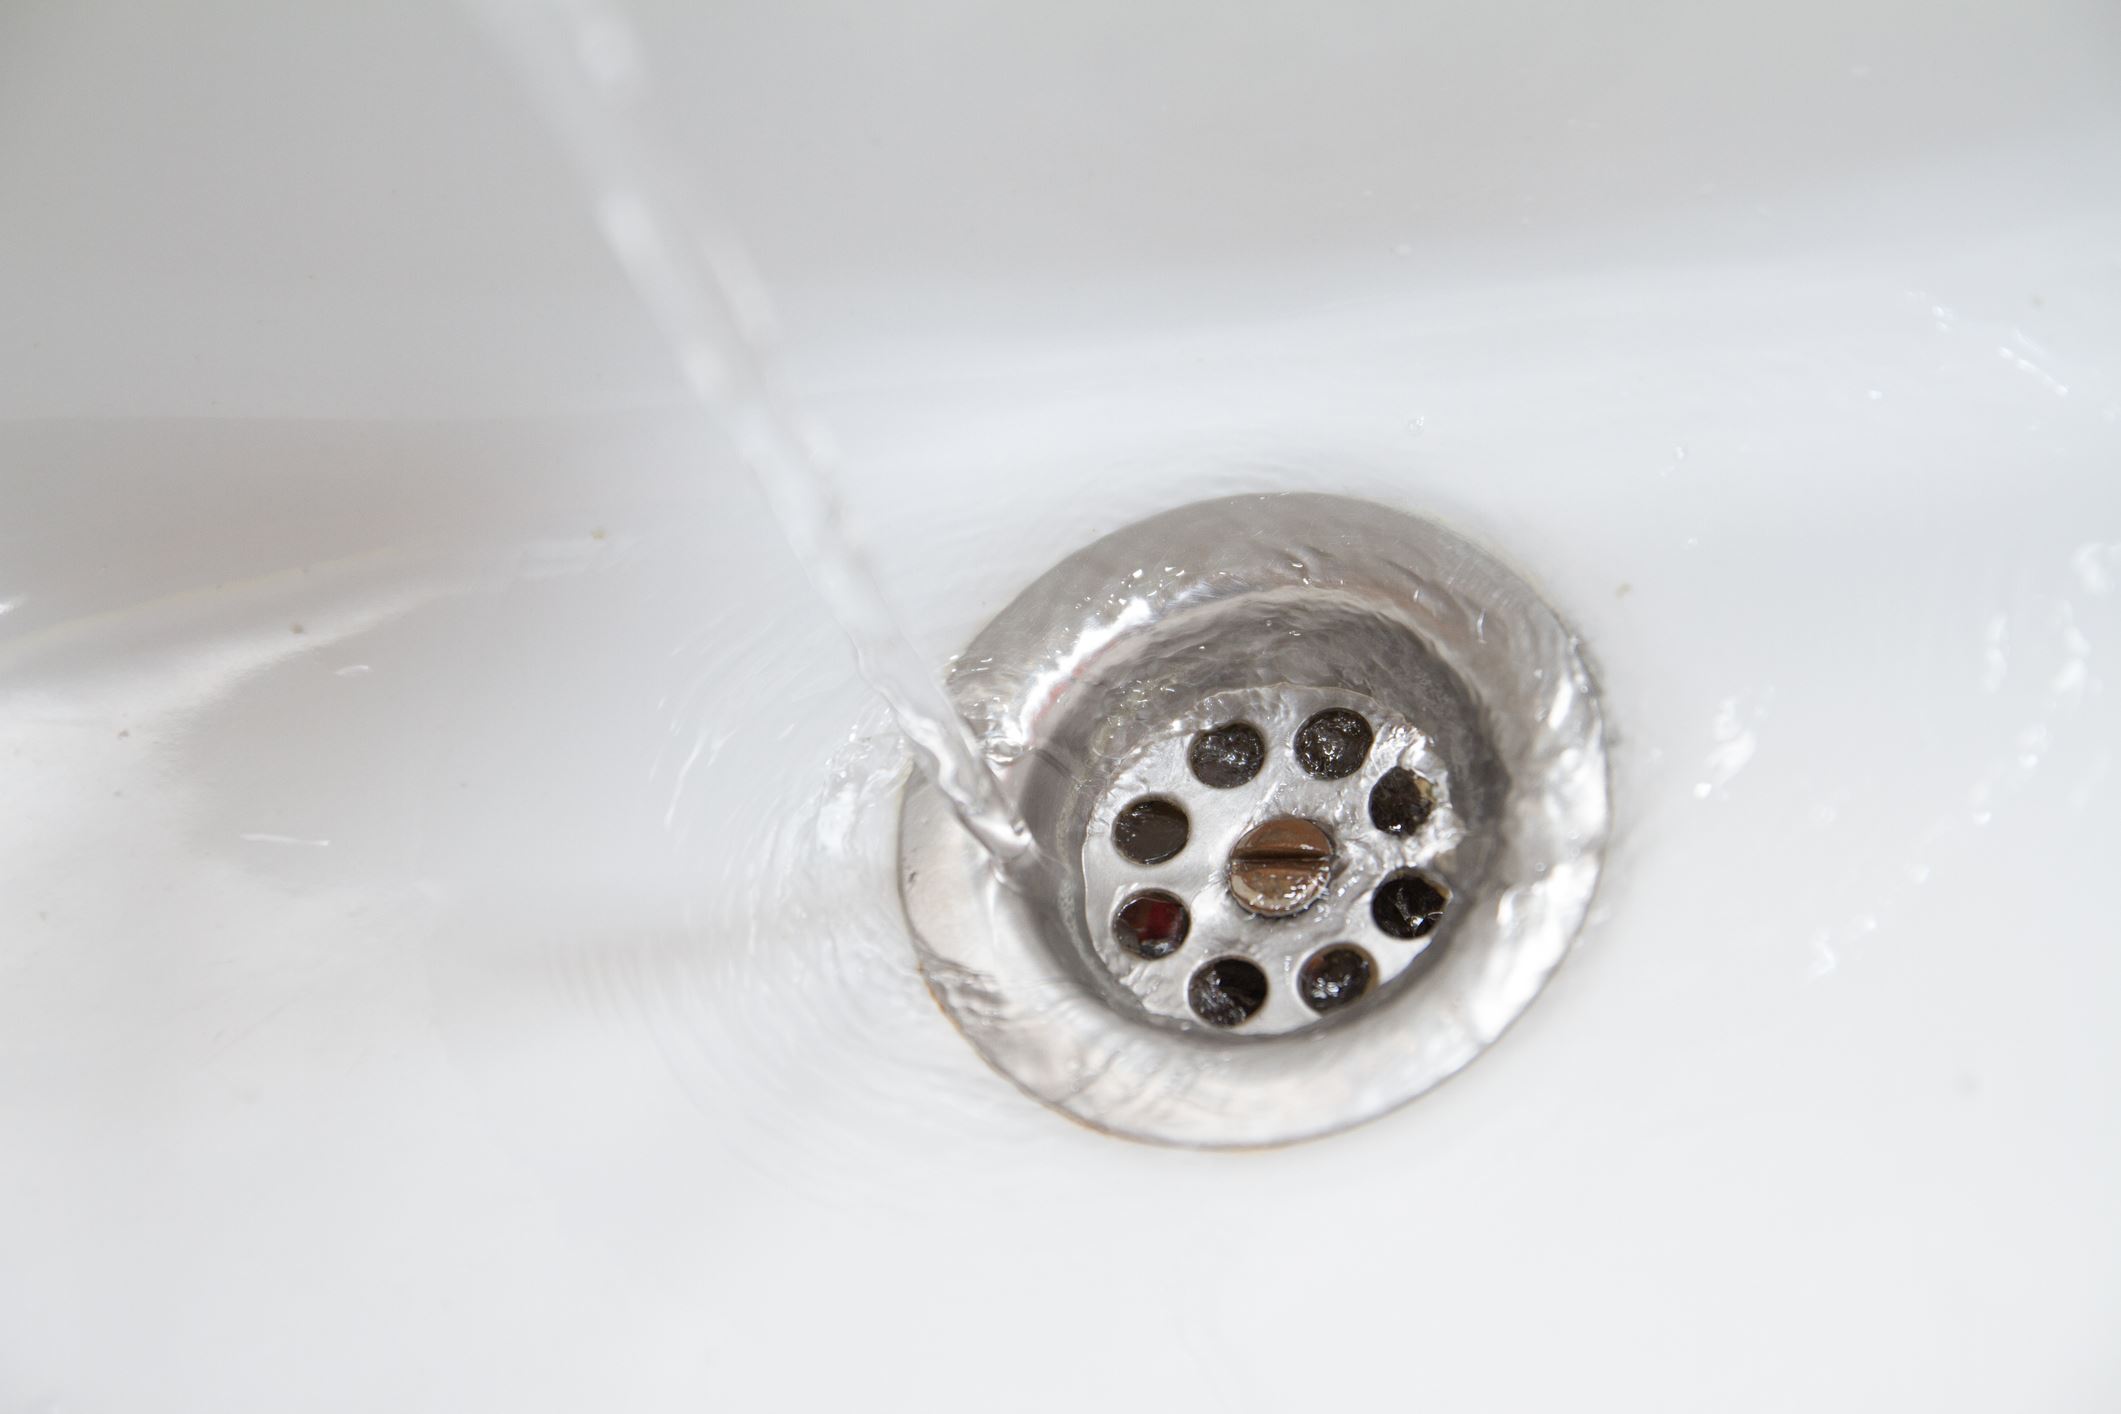 How to Unclog Shower & Bathtub Drain